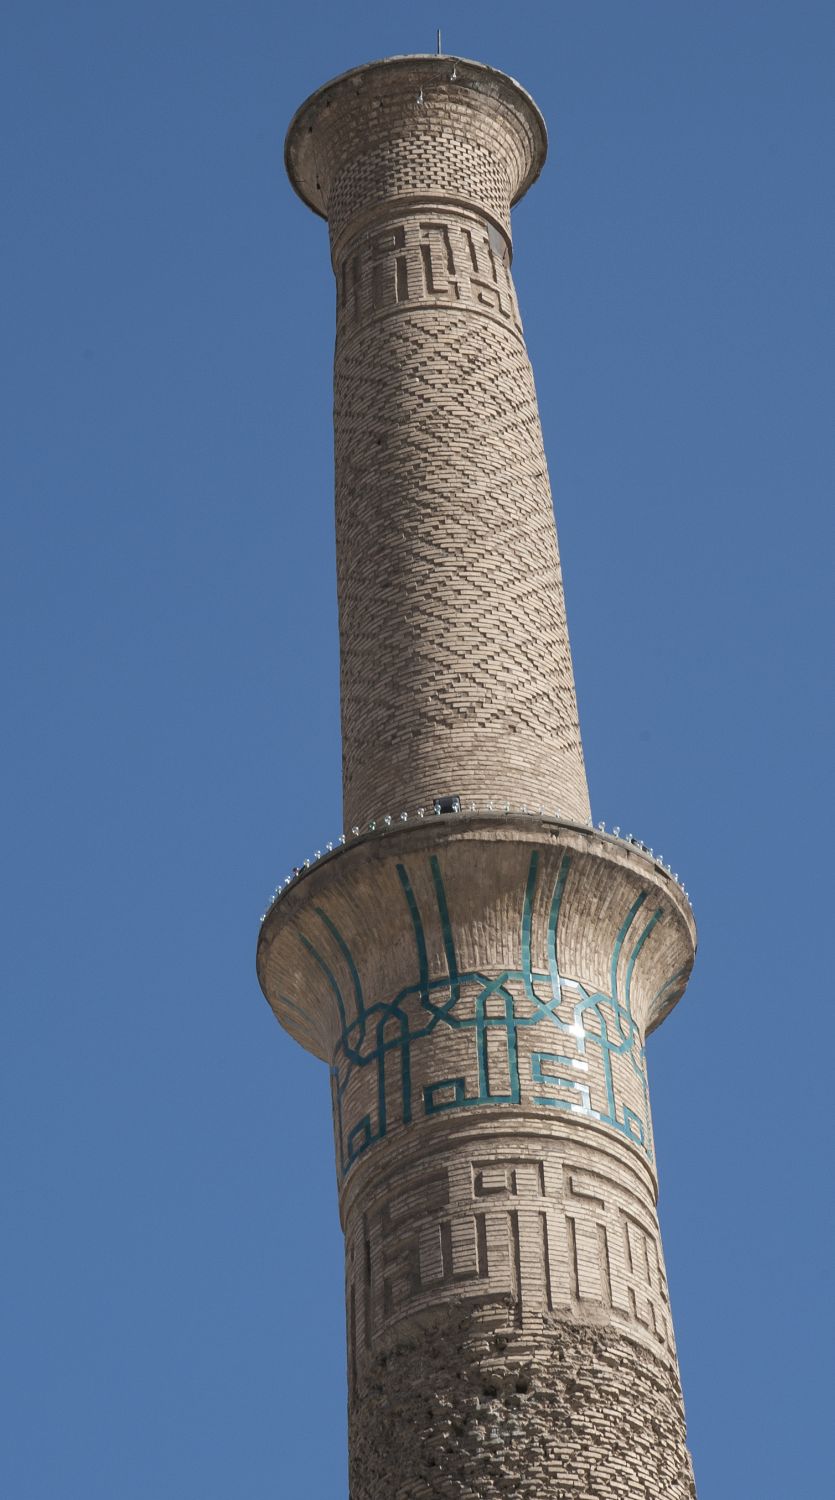 Minaret, view of top portion.